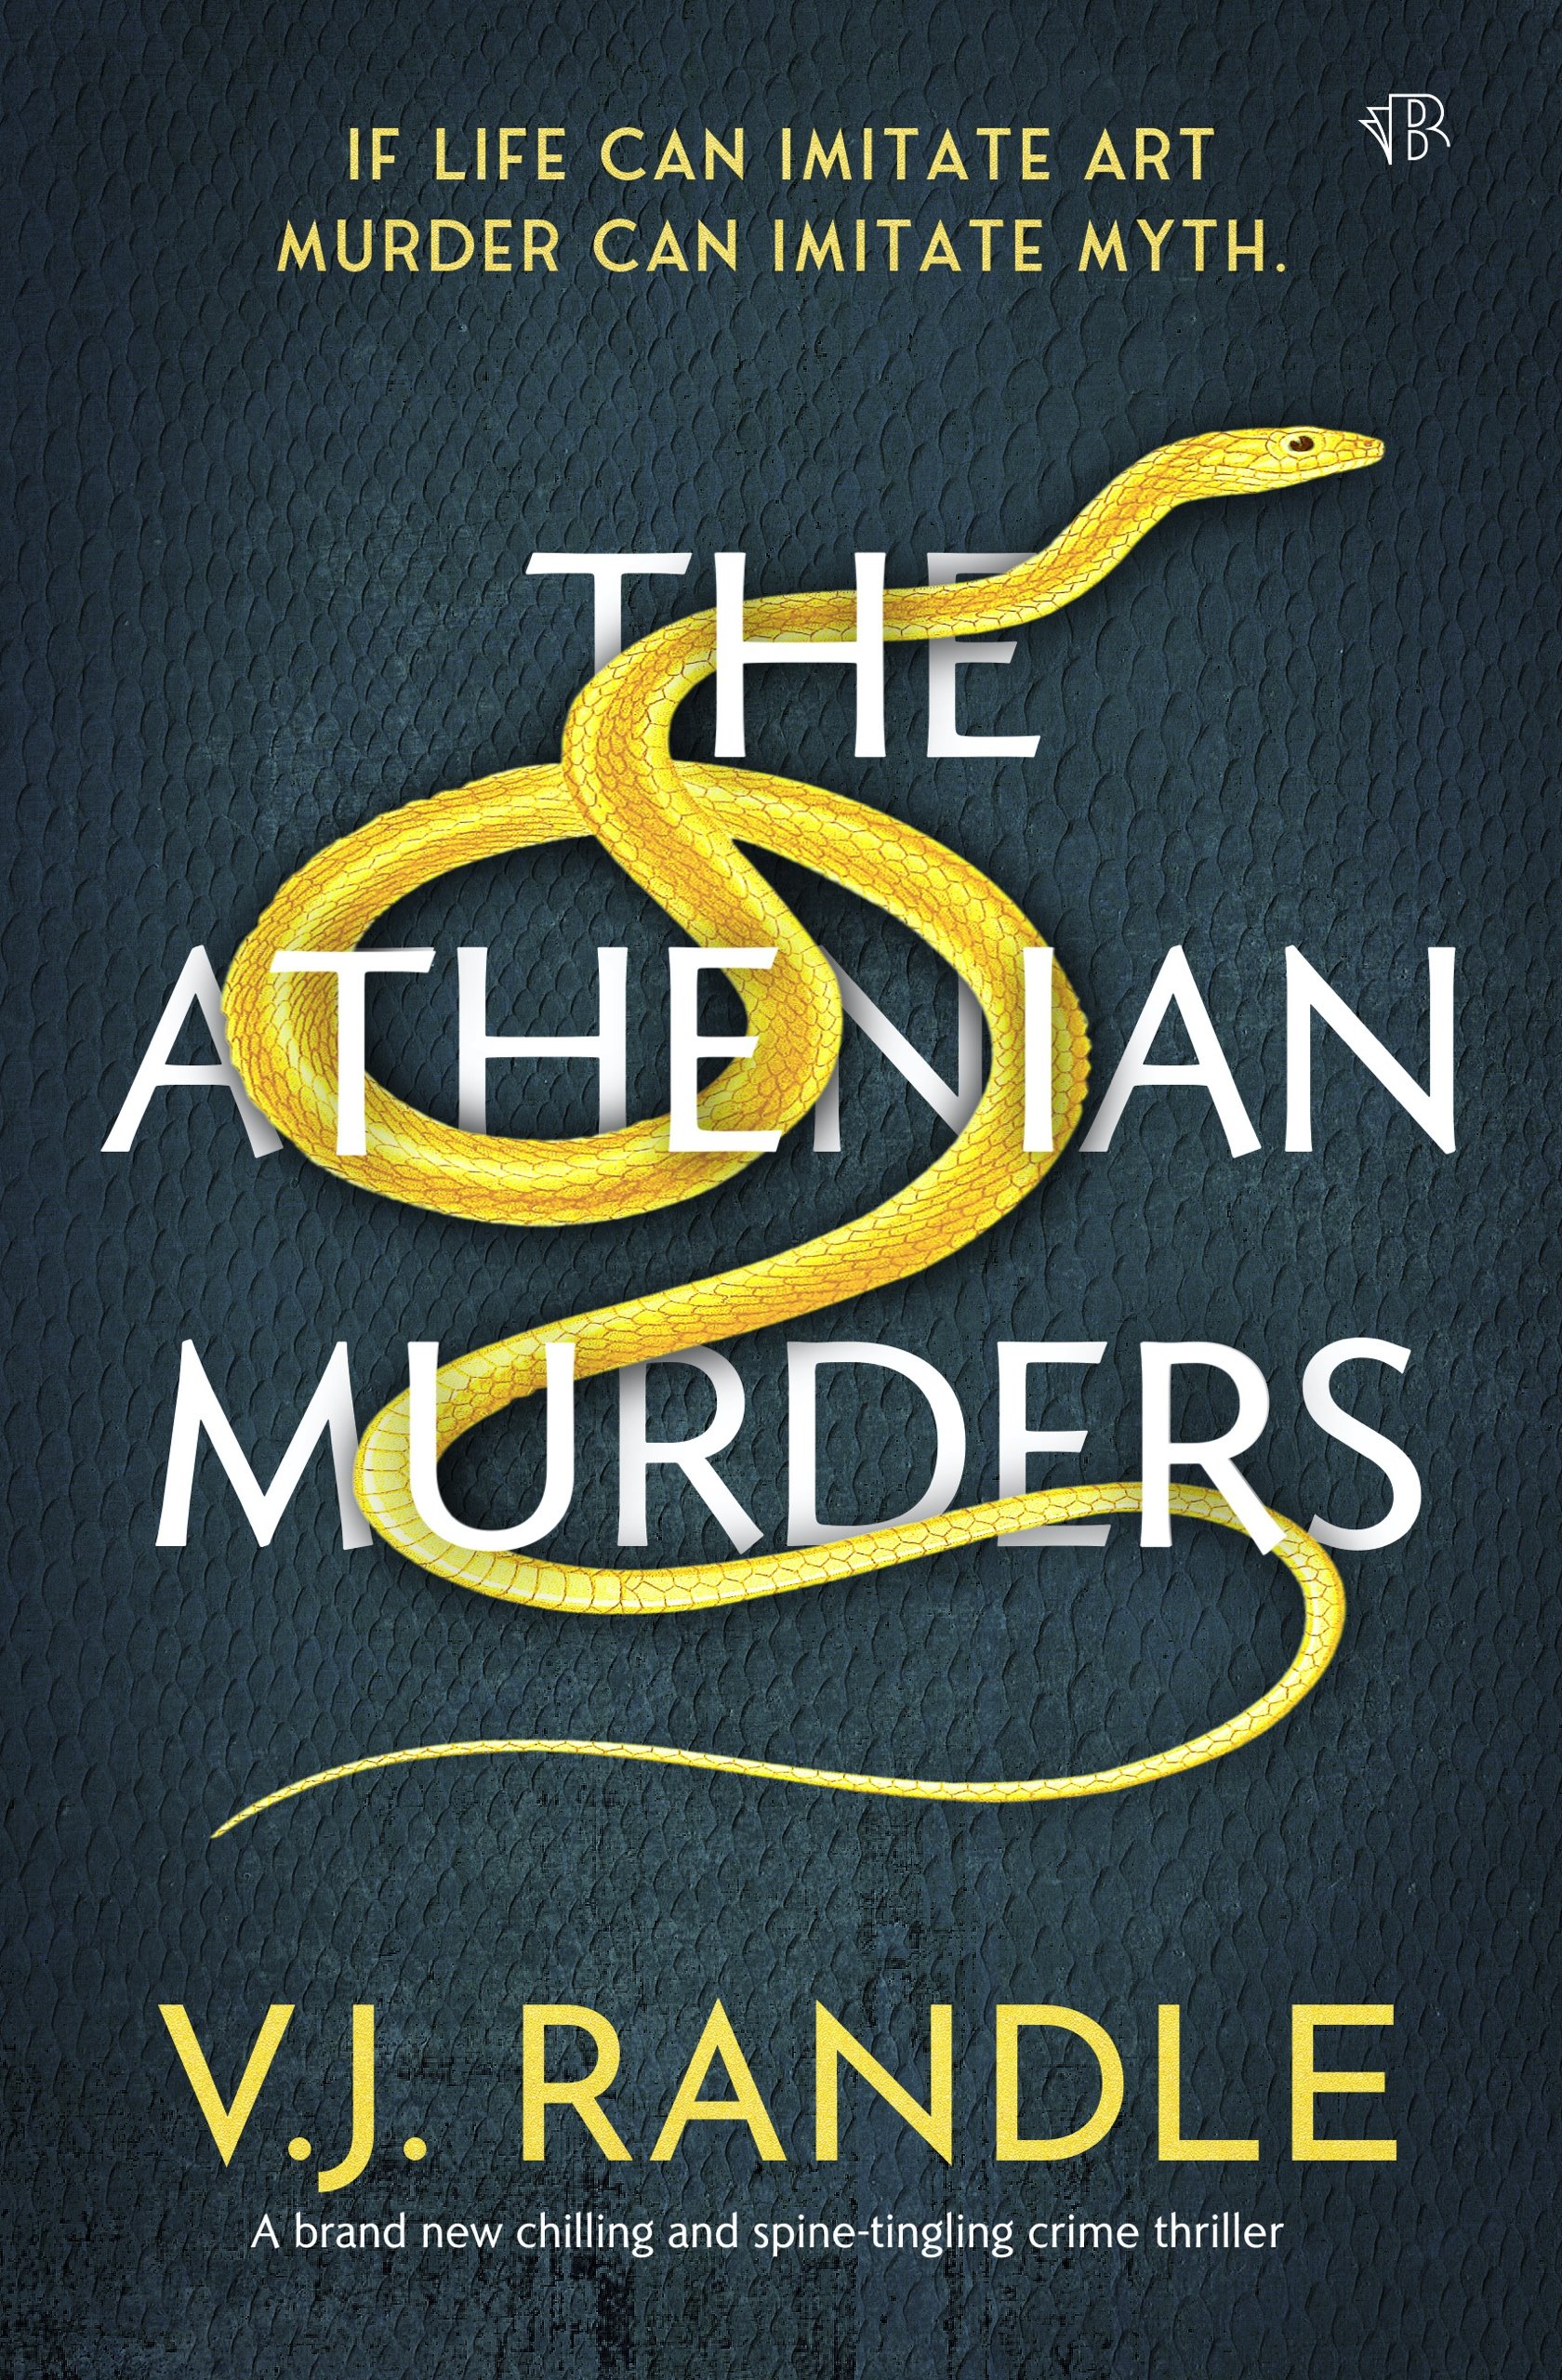 The-Athenian-Murders-Kindle (2).jpg